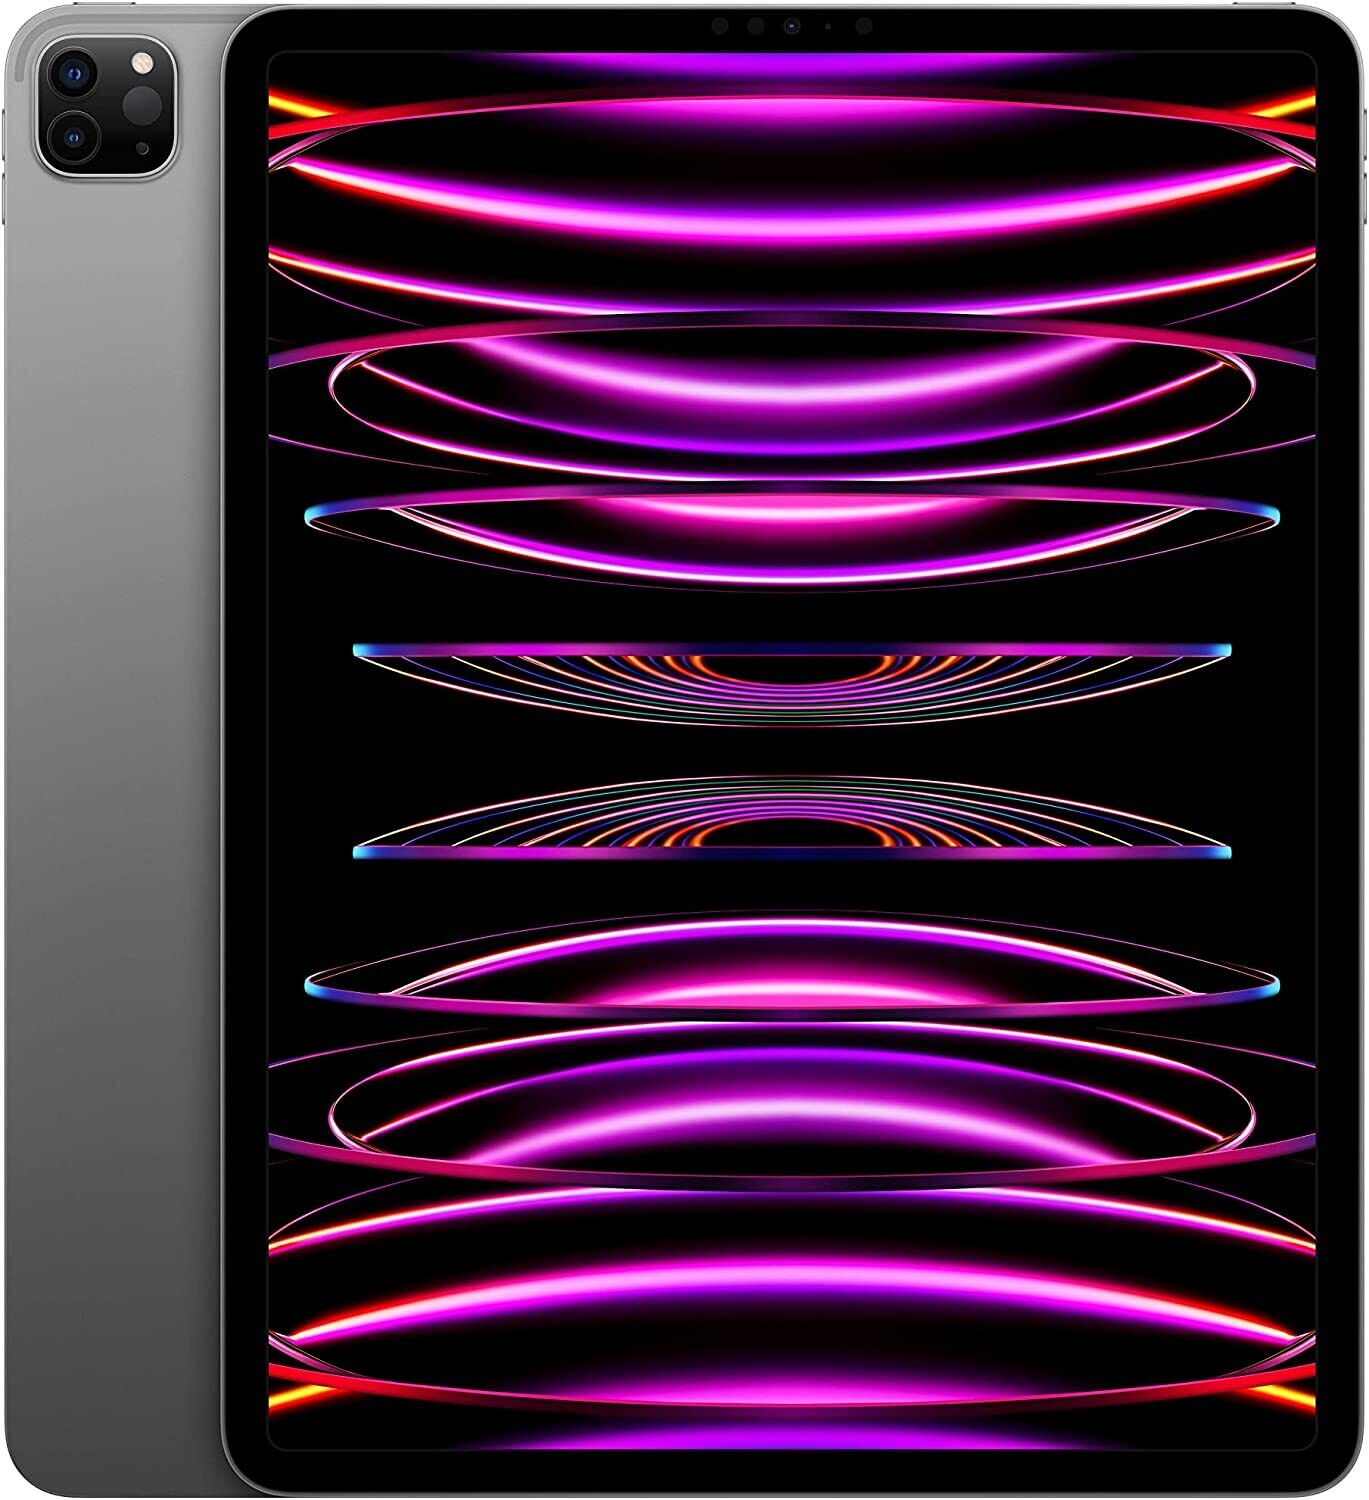 2022 Apple 11-inch iPad Pro (Wi-Fi + Cellular, 2TB) - Space Gray (4th Generation)